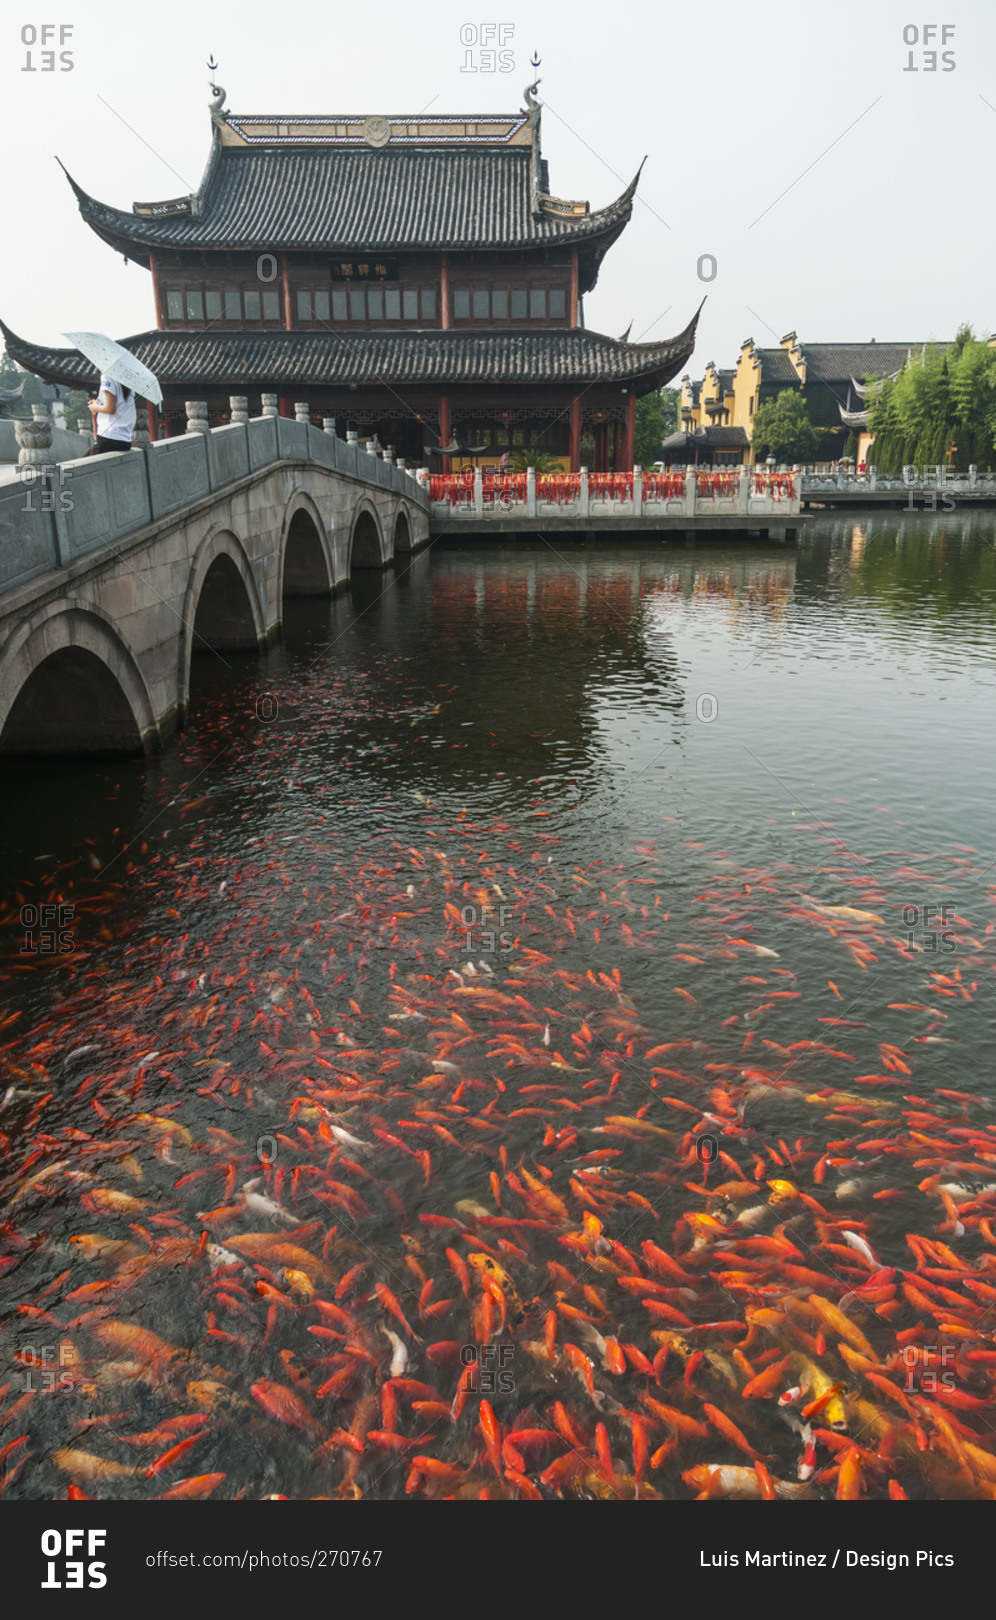 Zhouzhuang ancient town, beautiful traditional Chinese architecture, with koi fish in water, Zhouzhuang, Shanghai, China